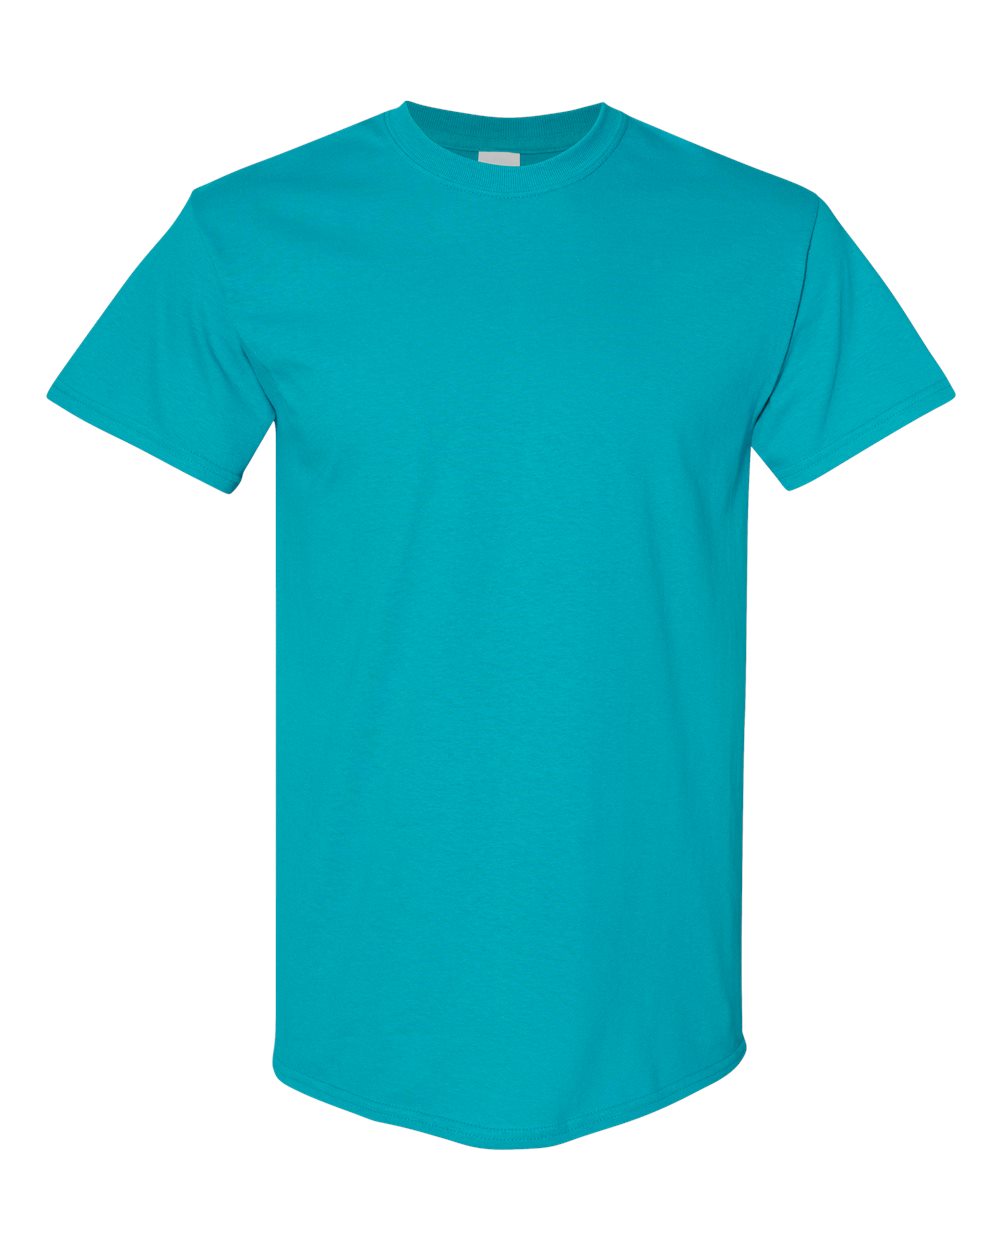 Gildan 5000 Adult Shirt - Medium